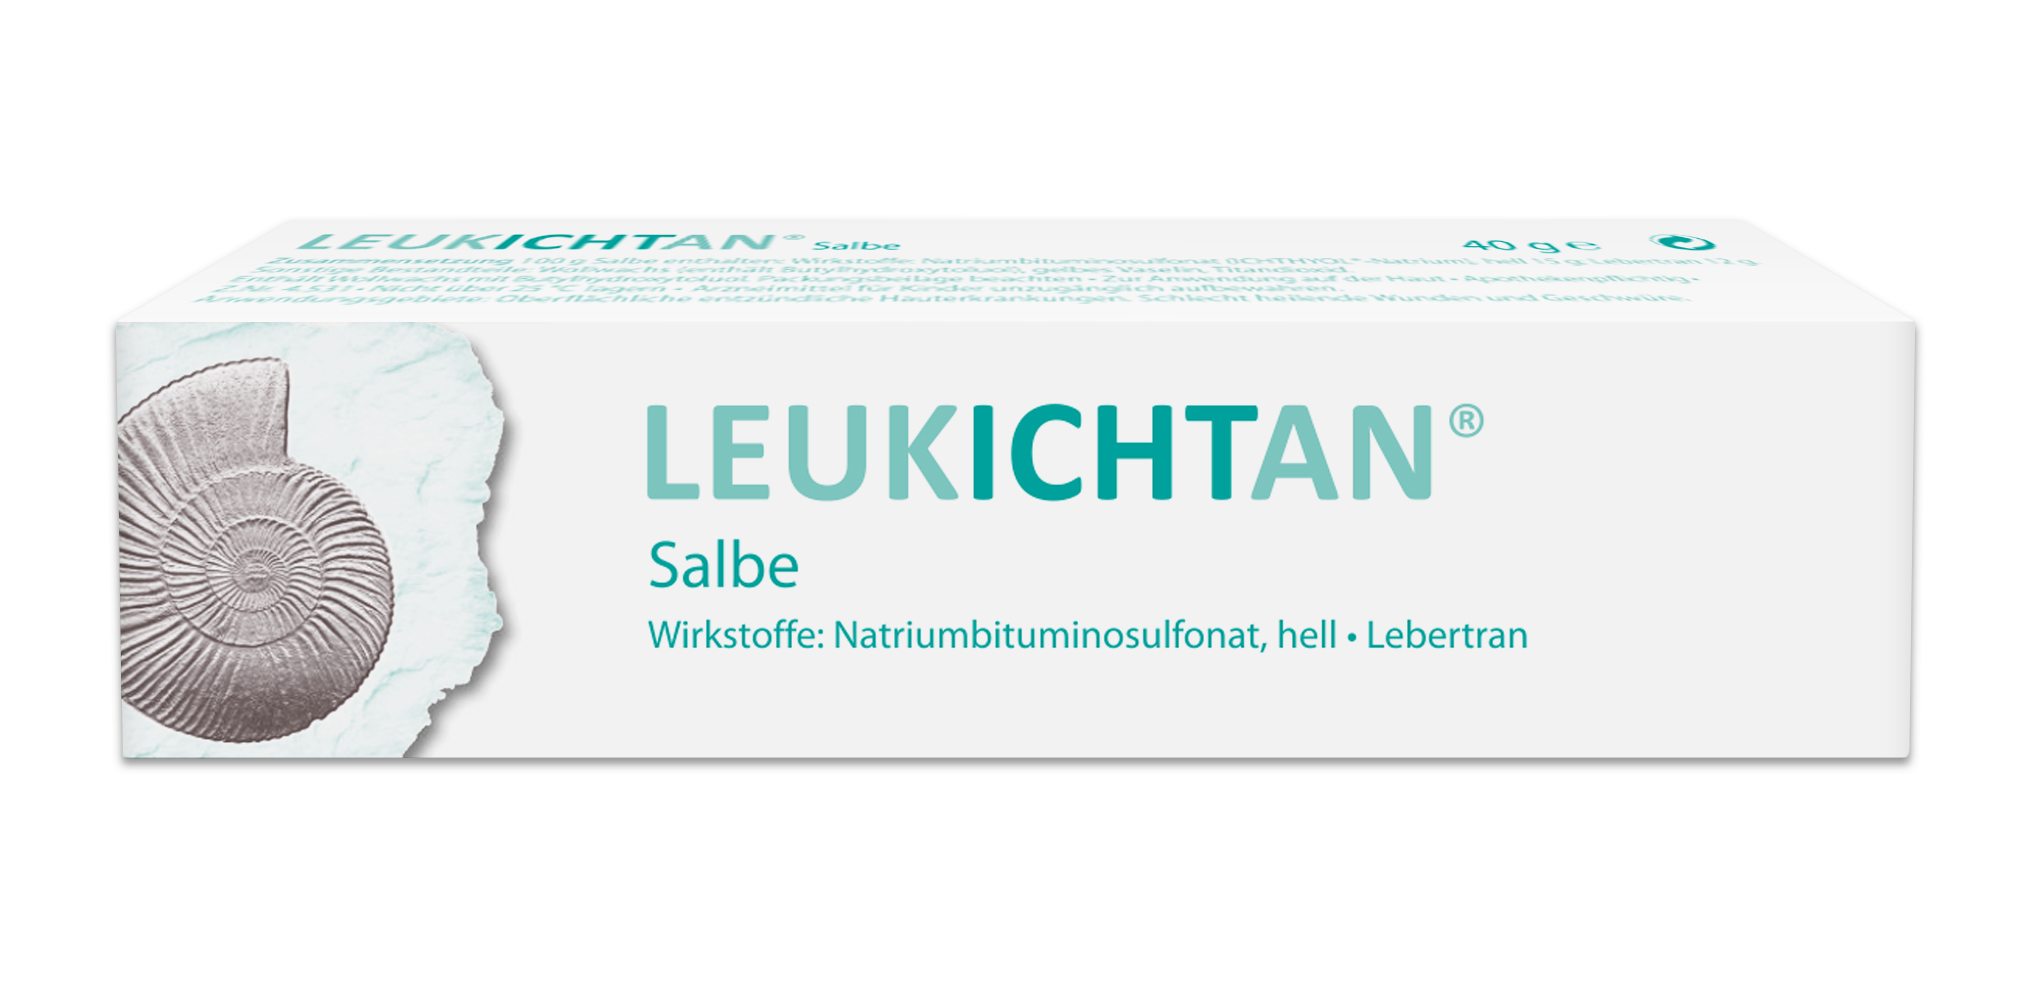 Leukichtan - Salbe